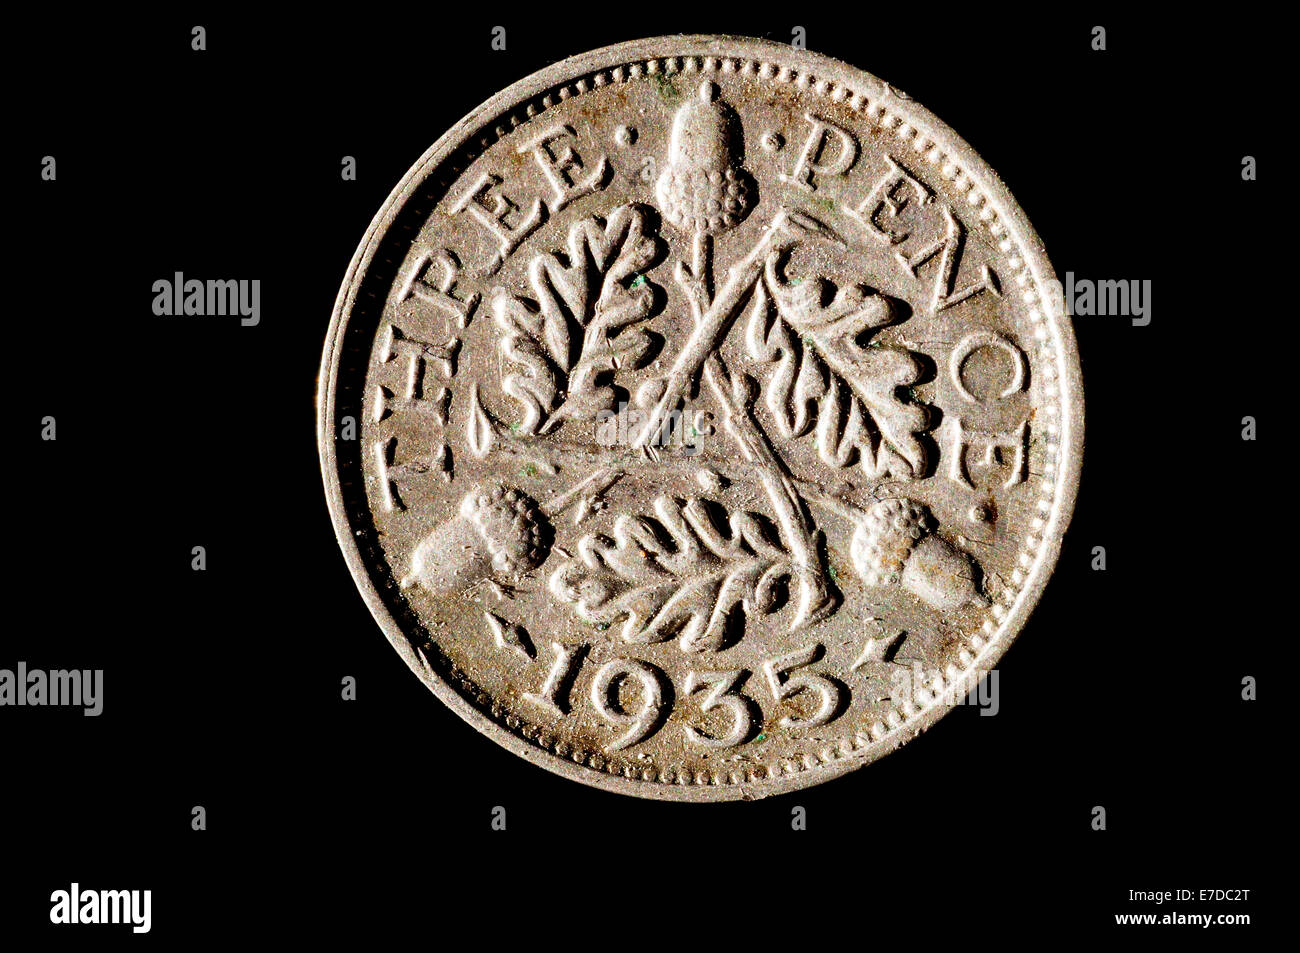 1935 British three pence coin in studio setting Stock Photo